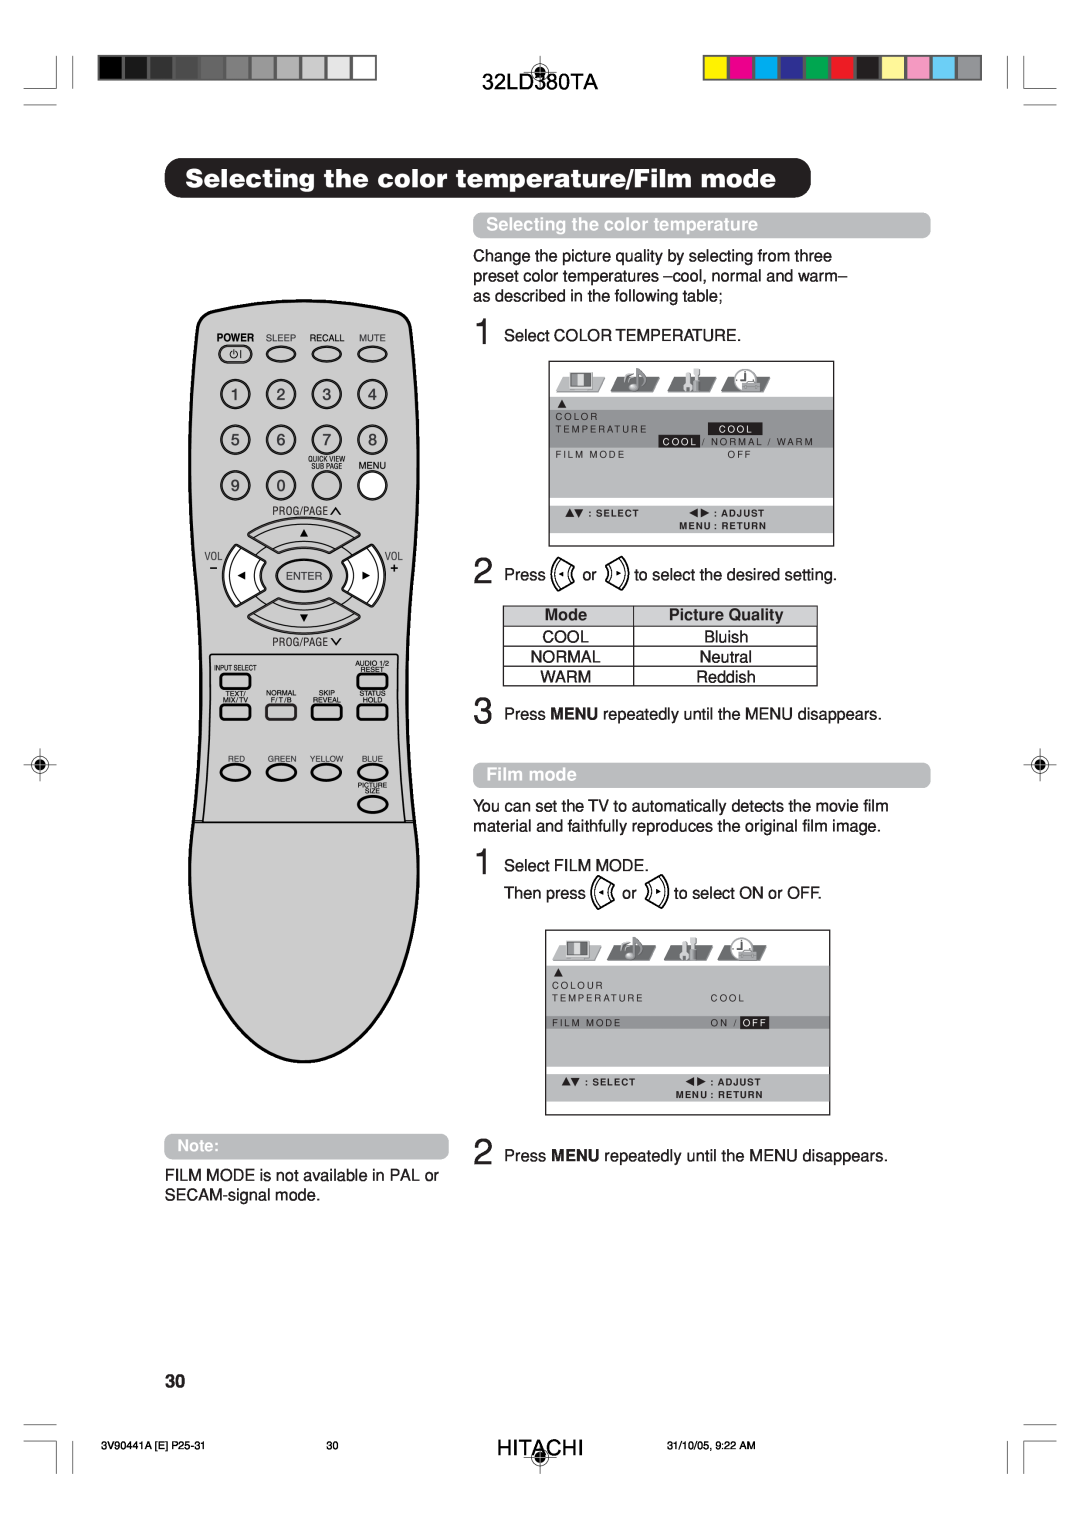 Hitachi 32LD380TA user manual Selecting the color temperature/Film mode, Mode, Picture Quality, Hitachi 